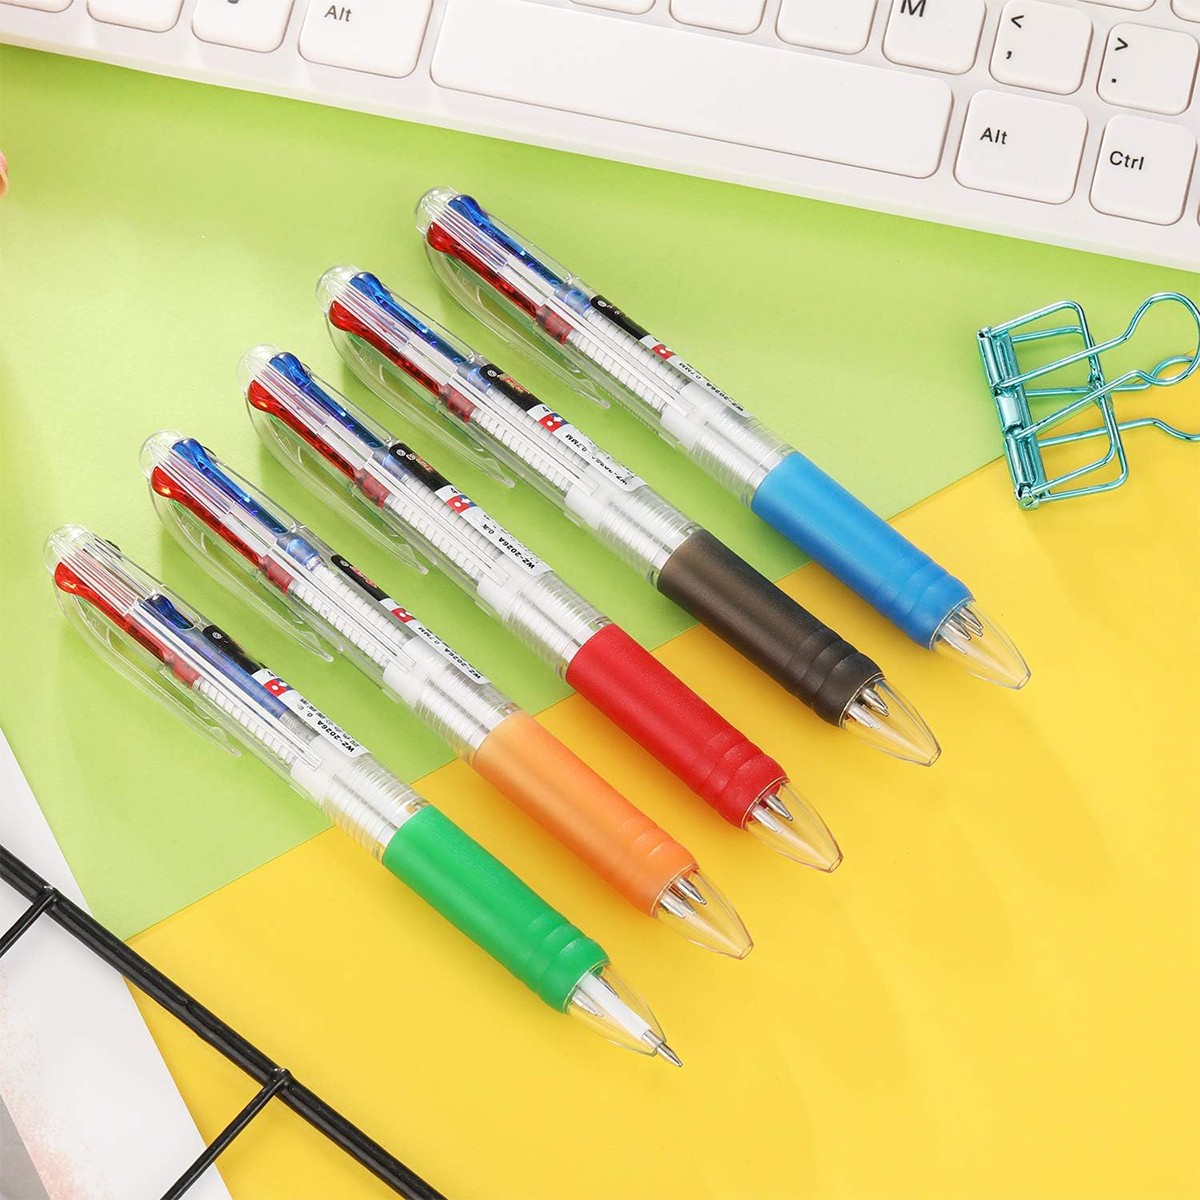  6 in 1 Multicolor Ballpoint Pen Bulk 0.5 mm 6 Color  Retractable Ballpoint Pen Pack Colorful Ink Pen Supplies Party Favors  Rainbow Pen for Office School Kids Teacher Gift Carnival